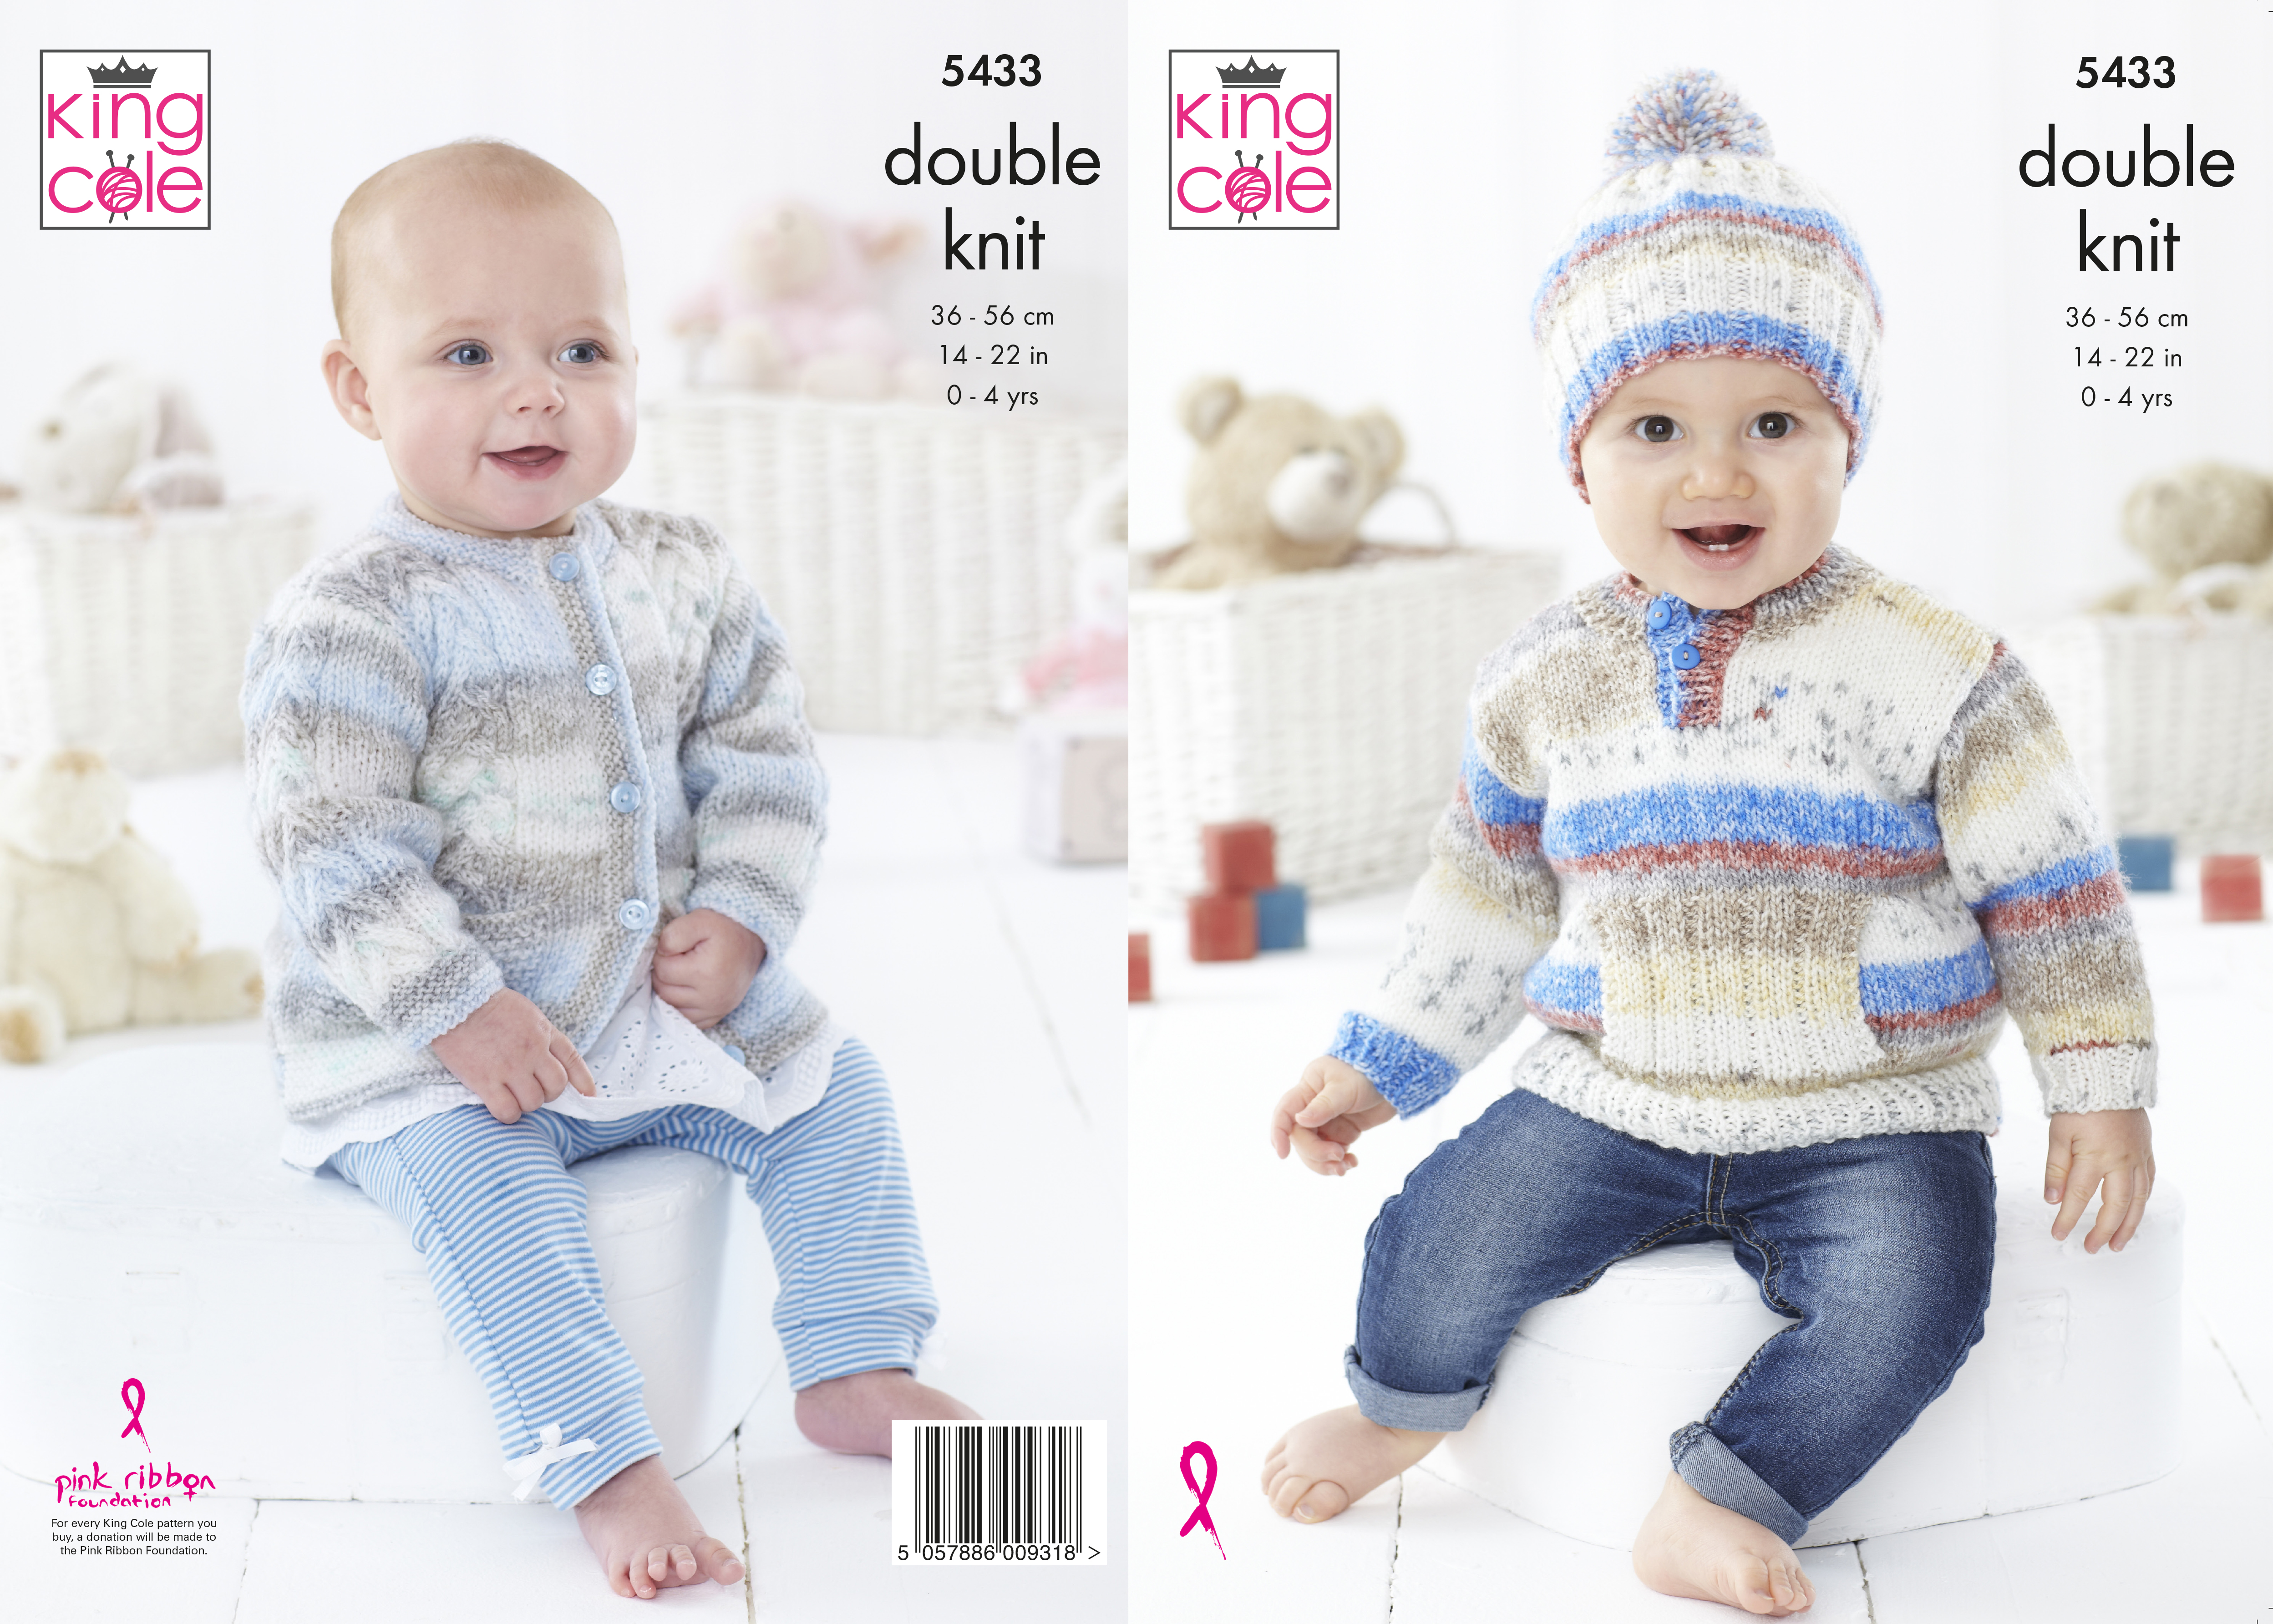 Sweater, Cardigan & Hat Knitted in Splash DK 5433 x3